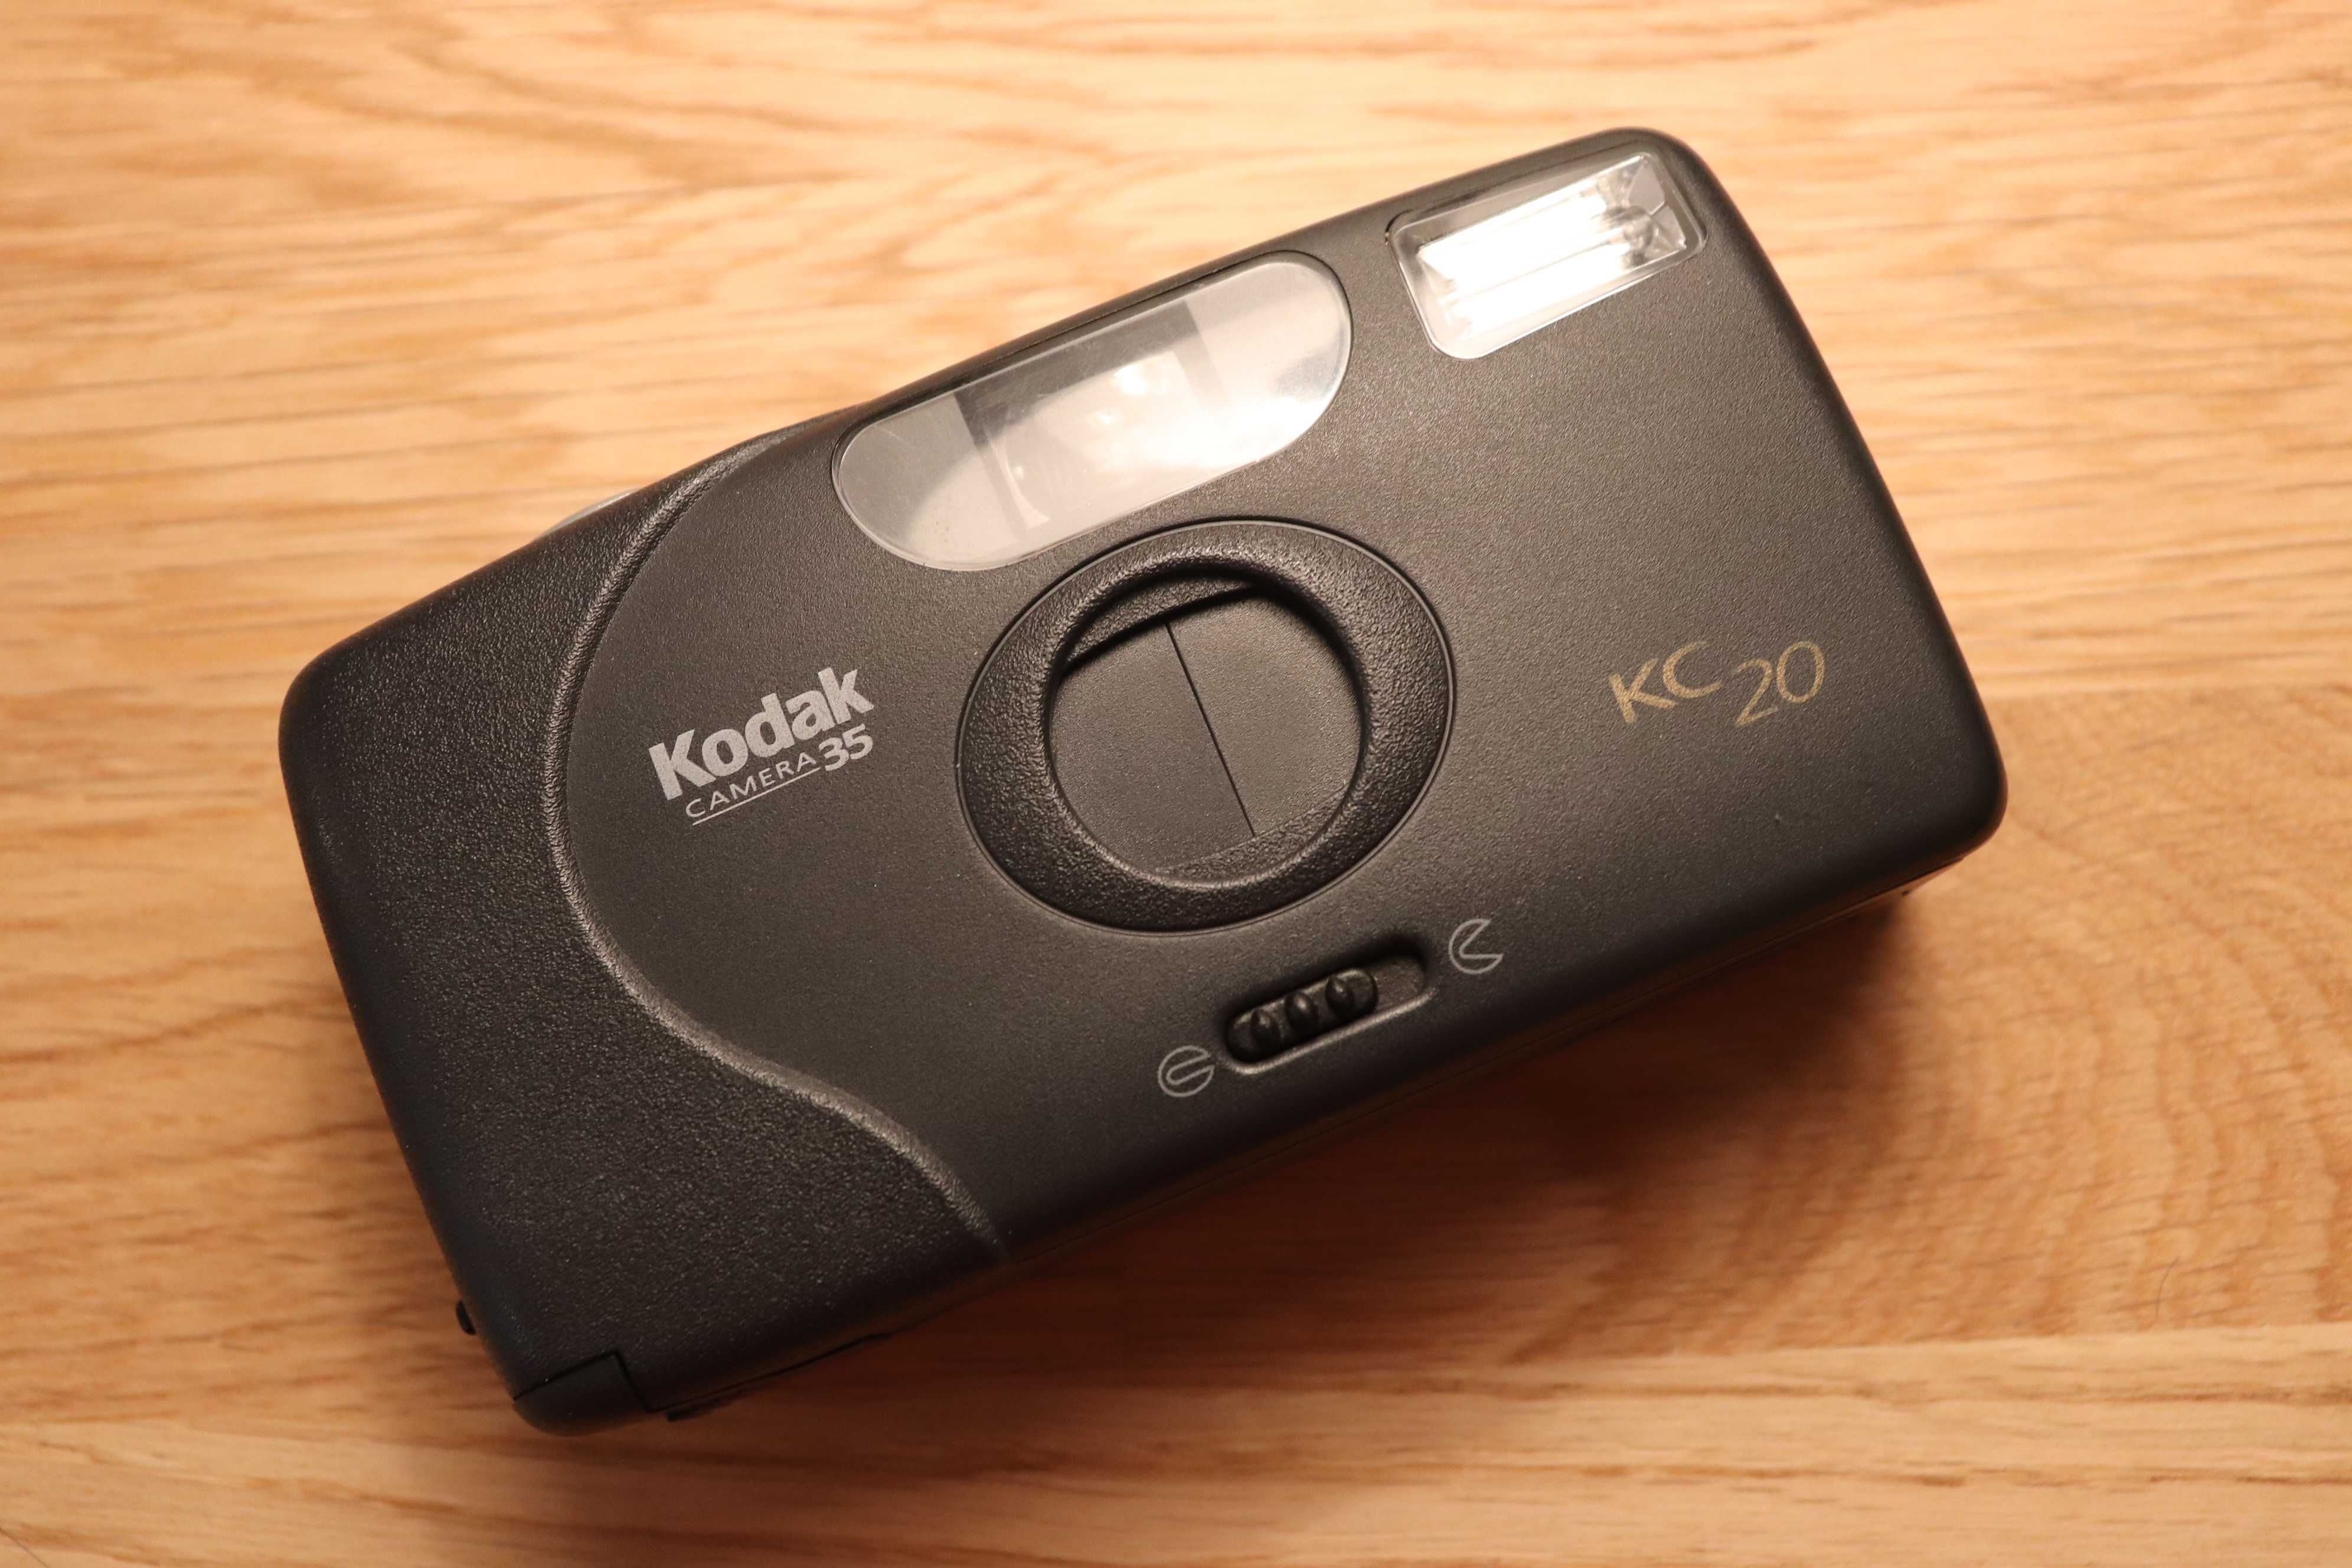 Point and Shoot Kodak KC20